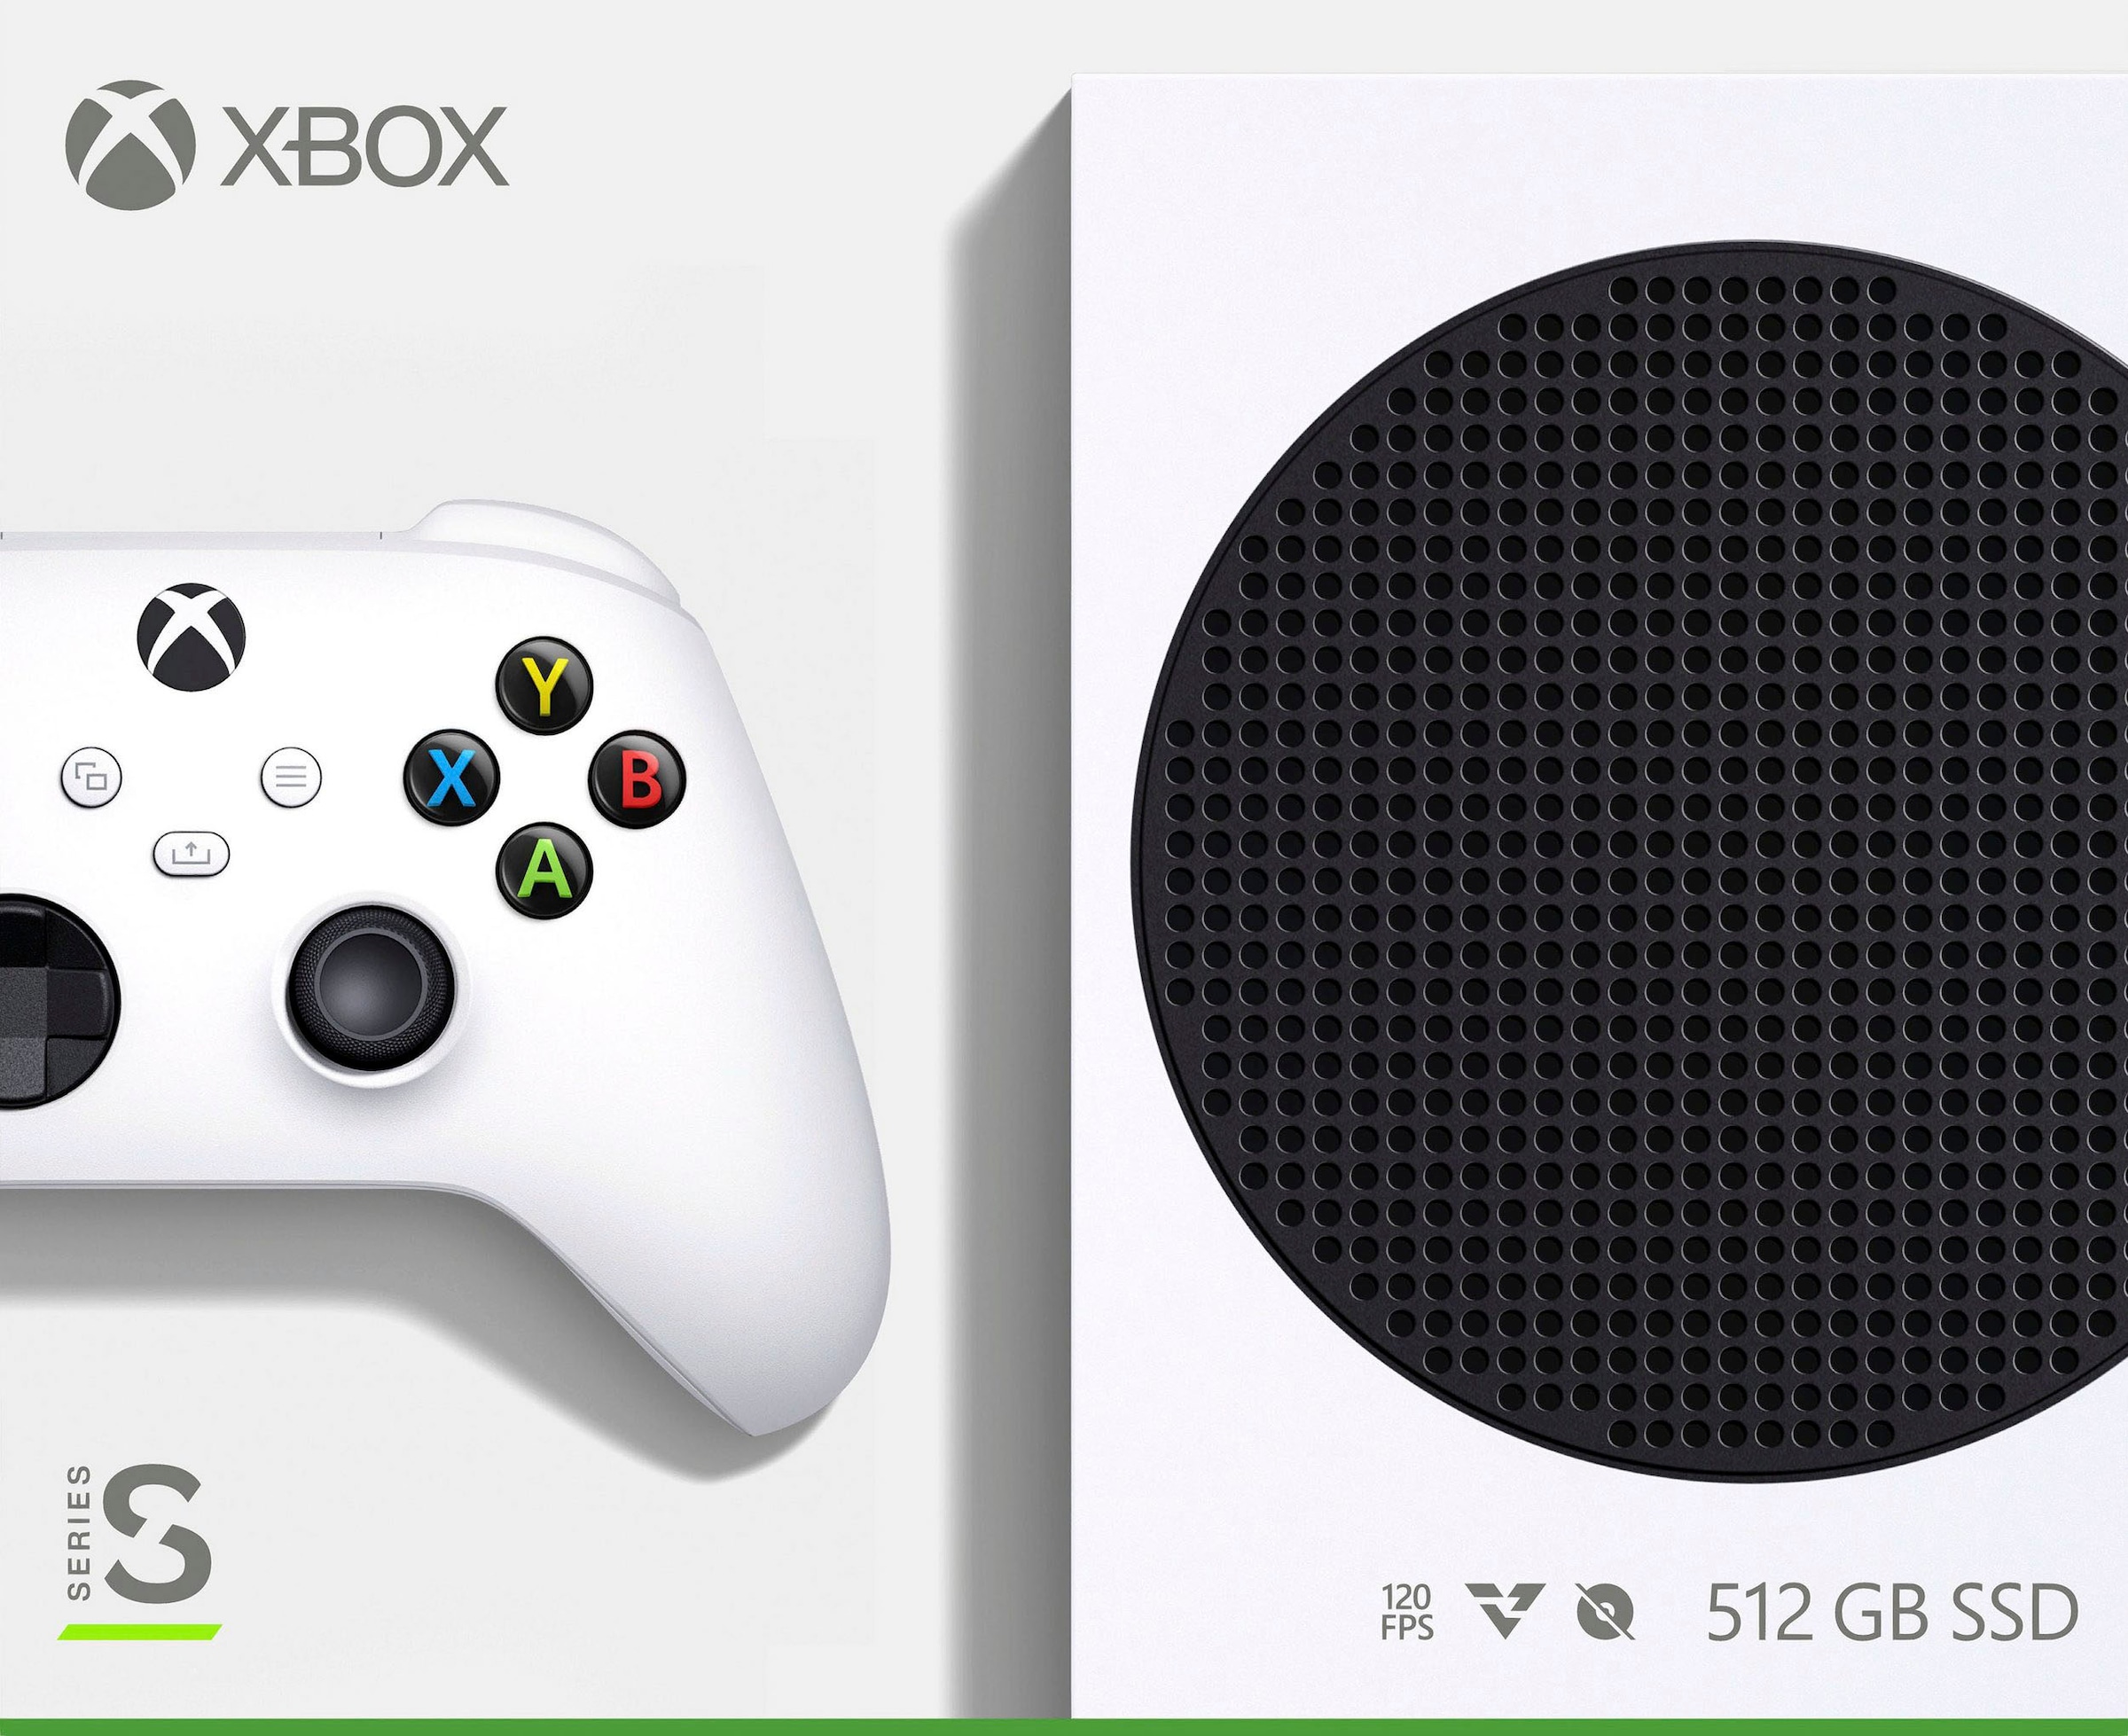 Xbox Konsolen-Set »Series S«, inkl. Redfall (Code)